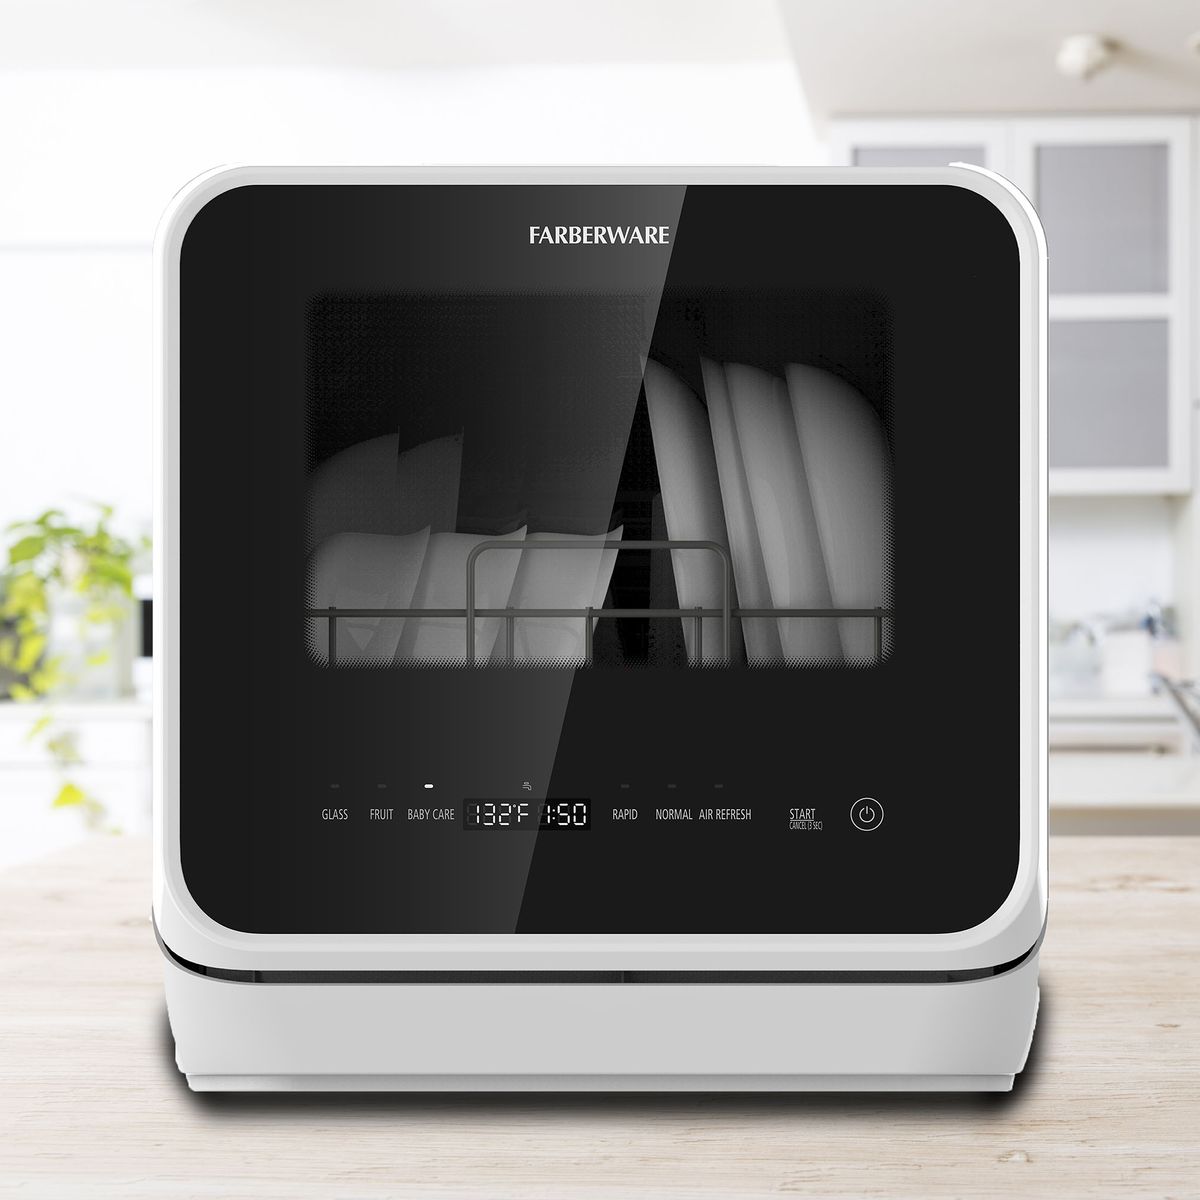 Farberware Portable Countertop Dishwasher Review 2020 | The Strategist